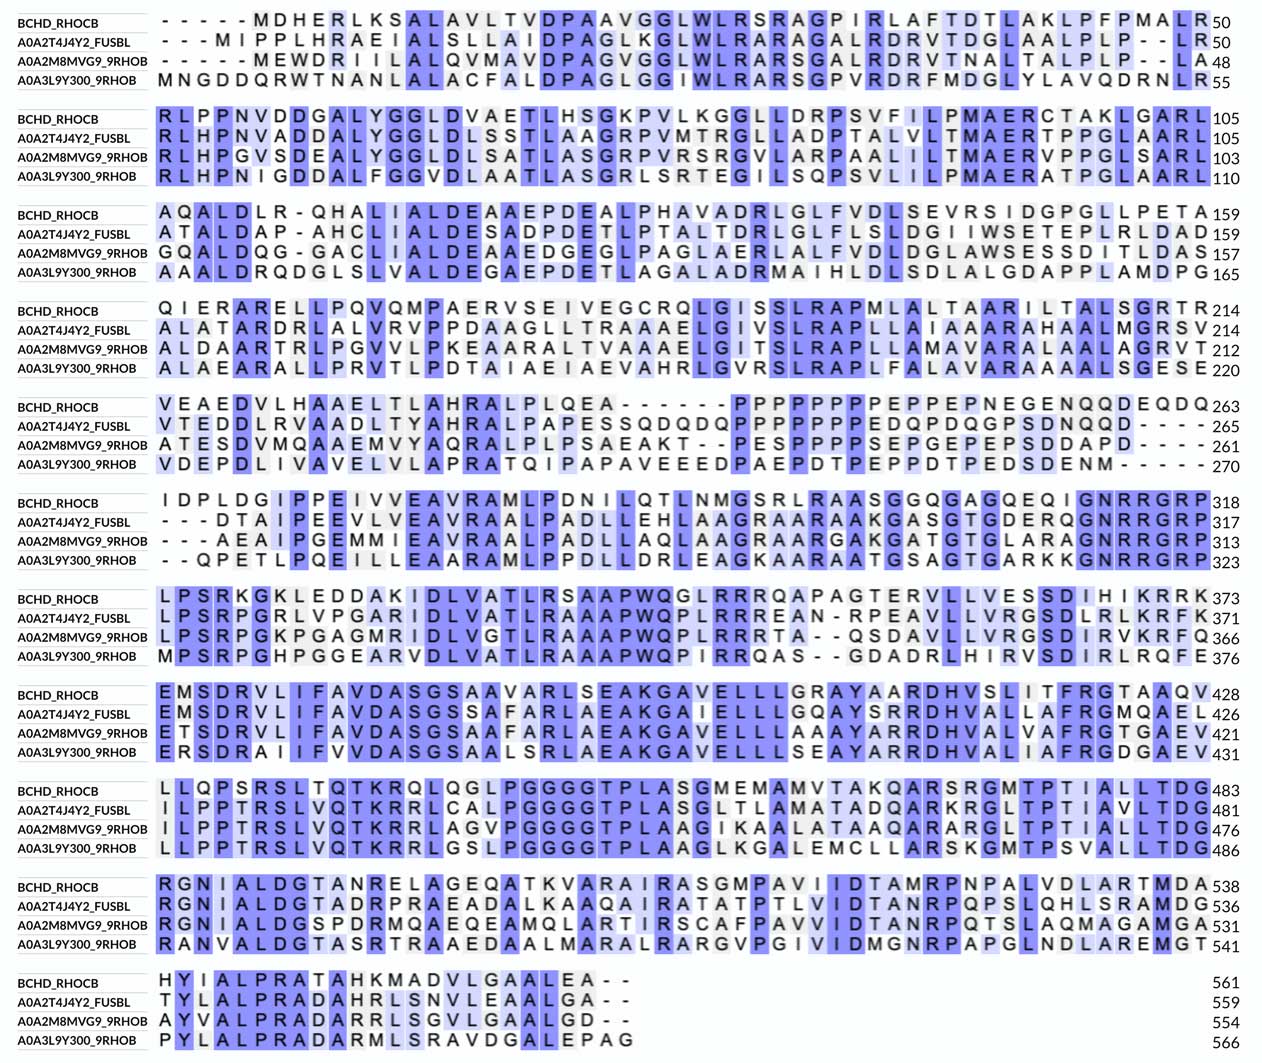 PDM250 mutation probability matrix